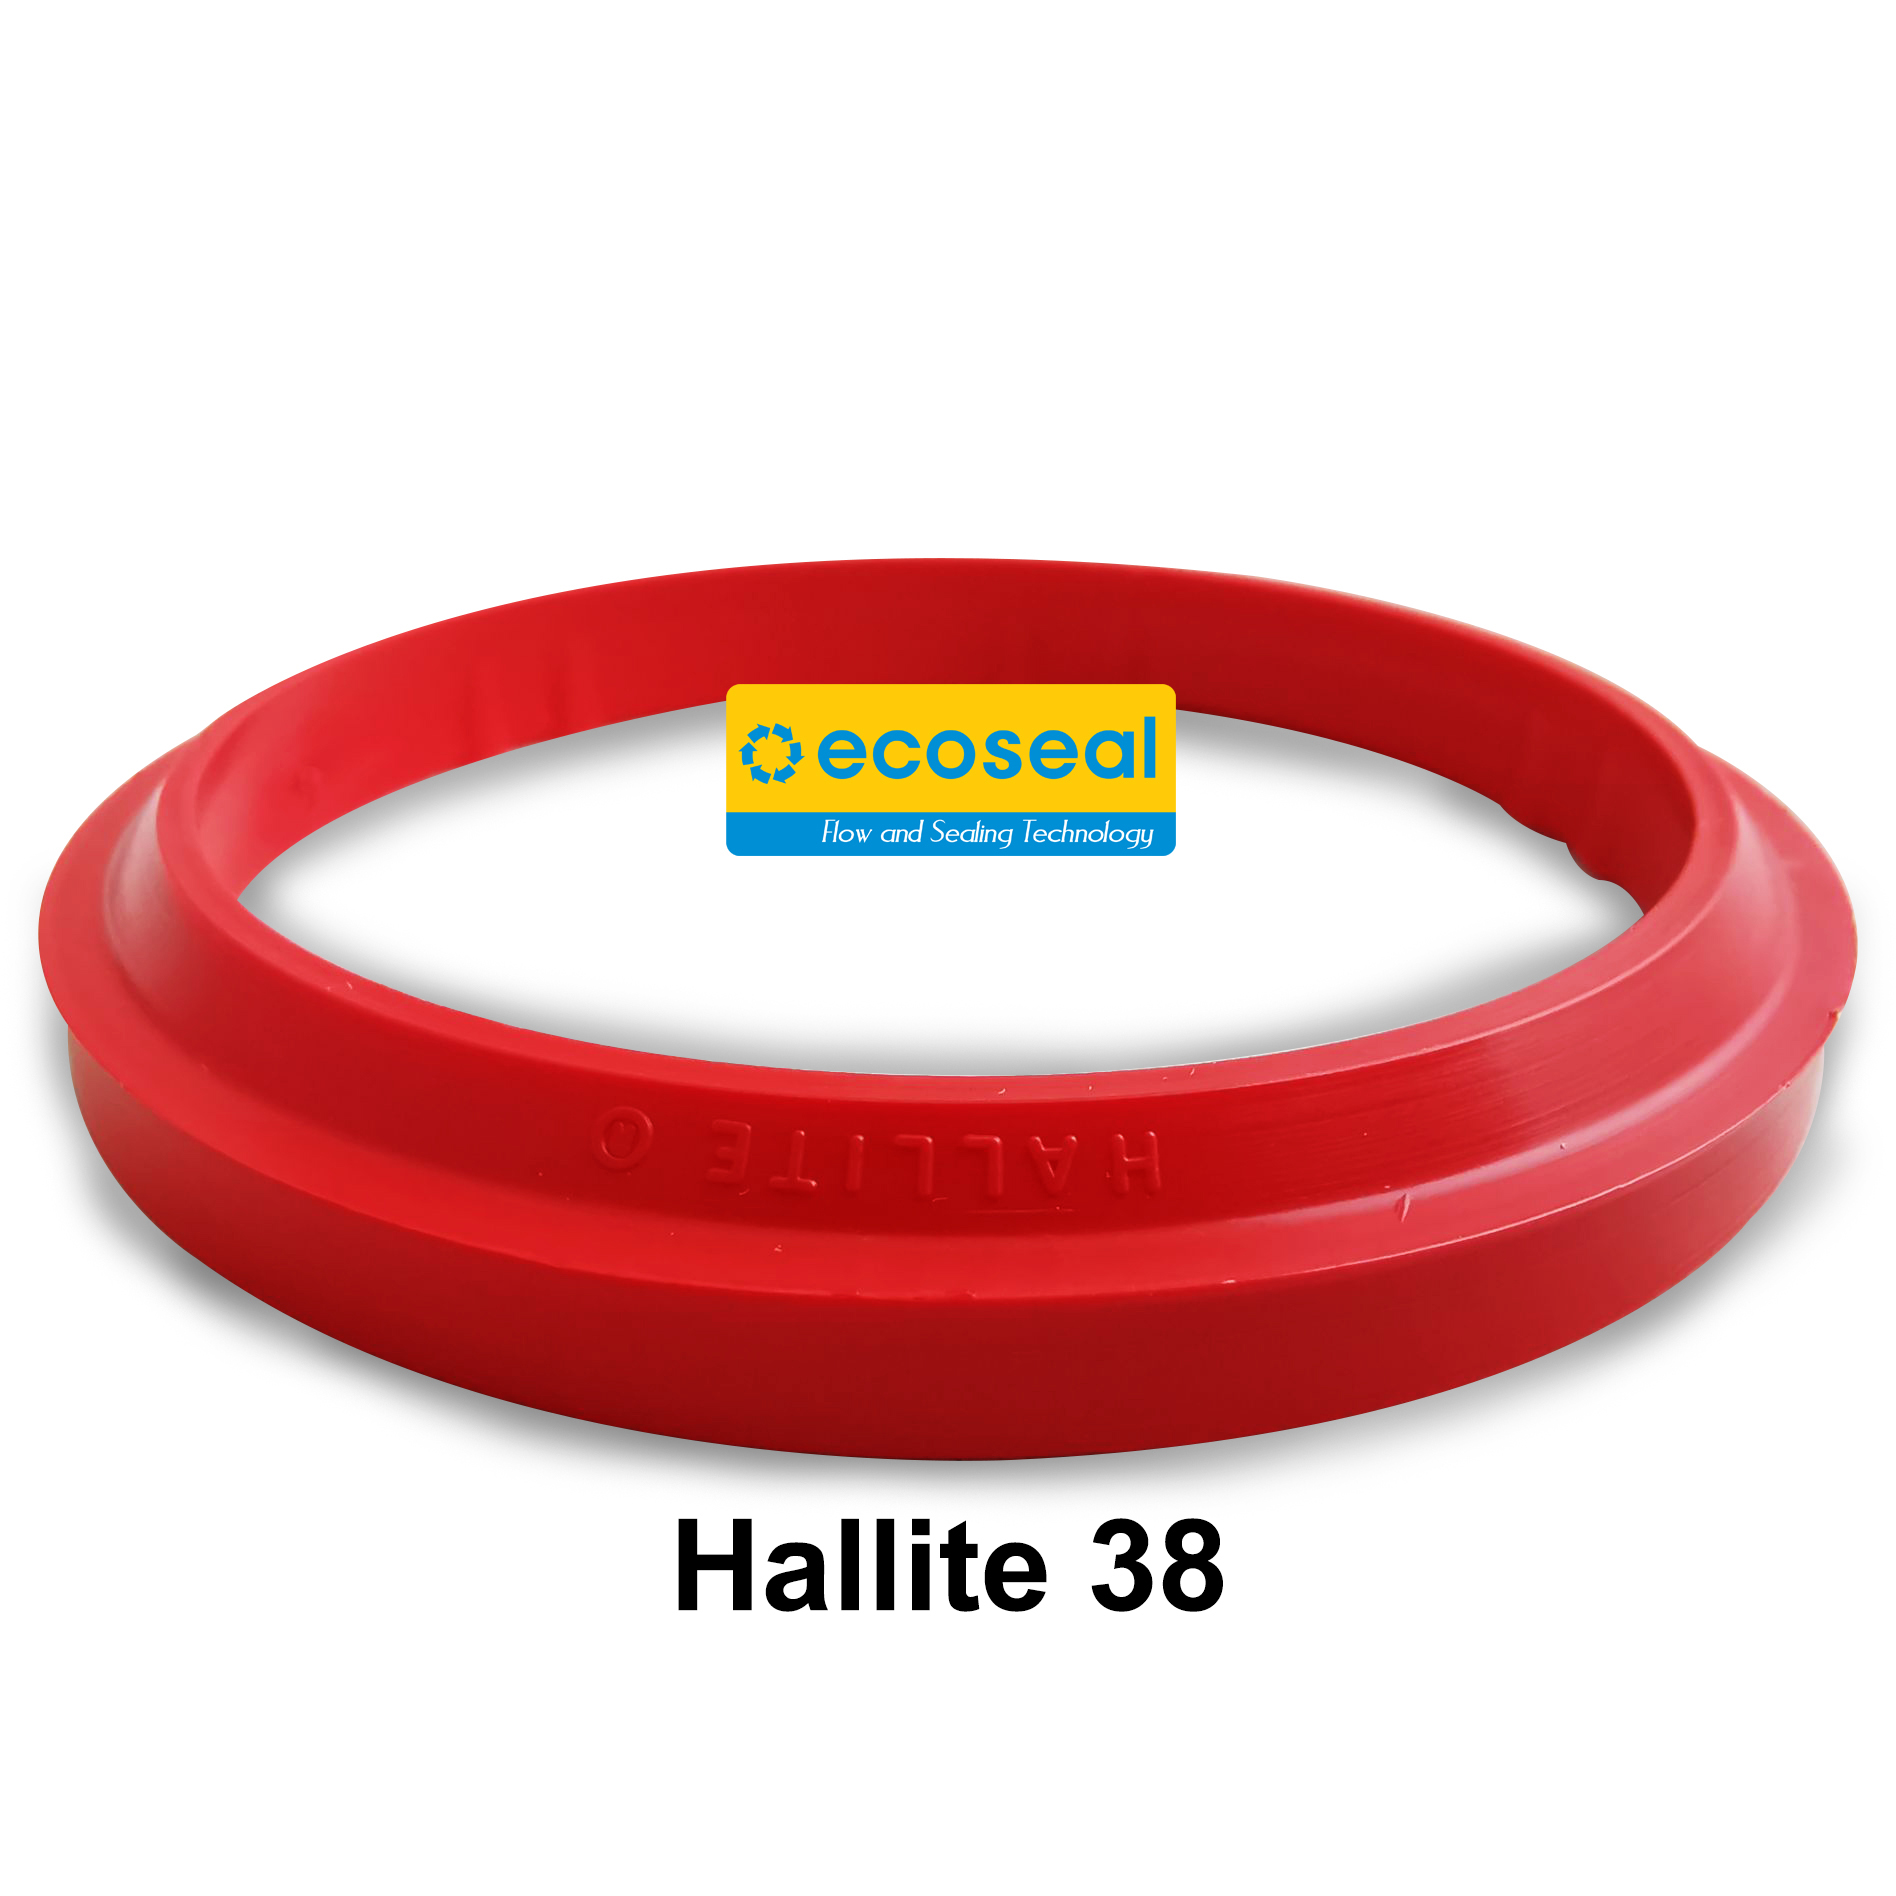 Hallite 38